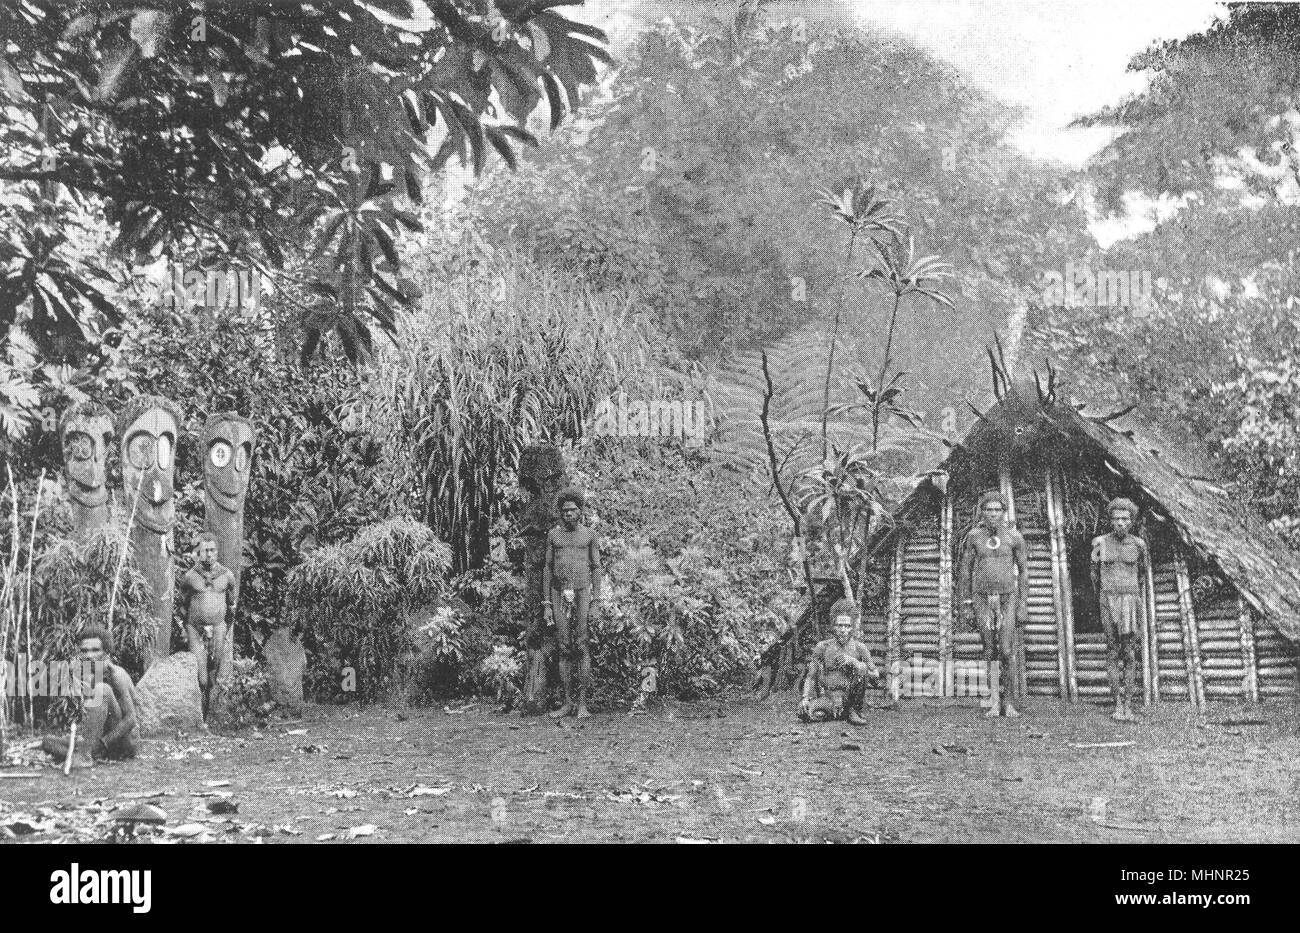 Solomon islands men Black and White Stock Photos & Images - Alamy